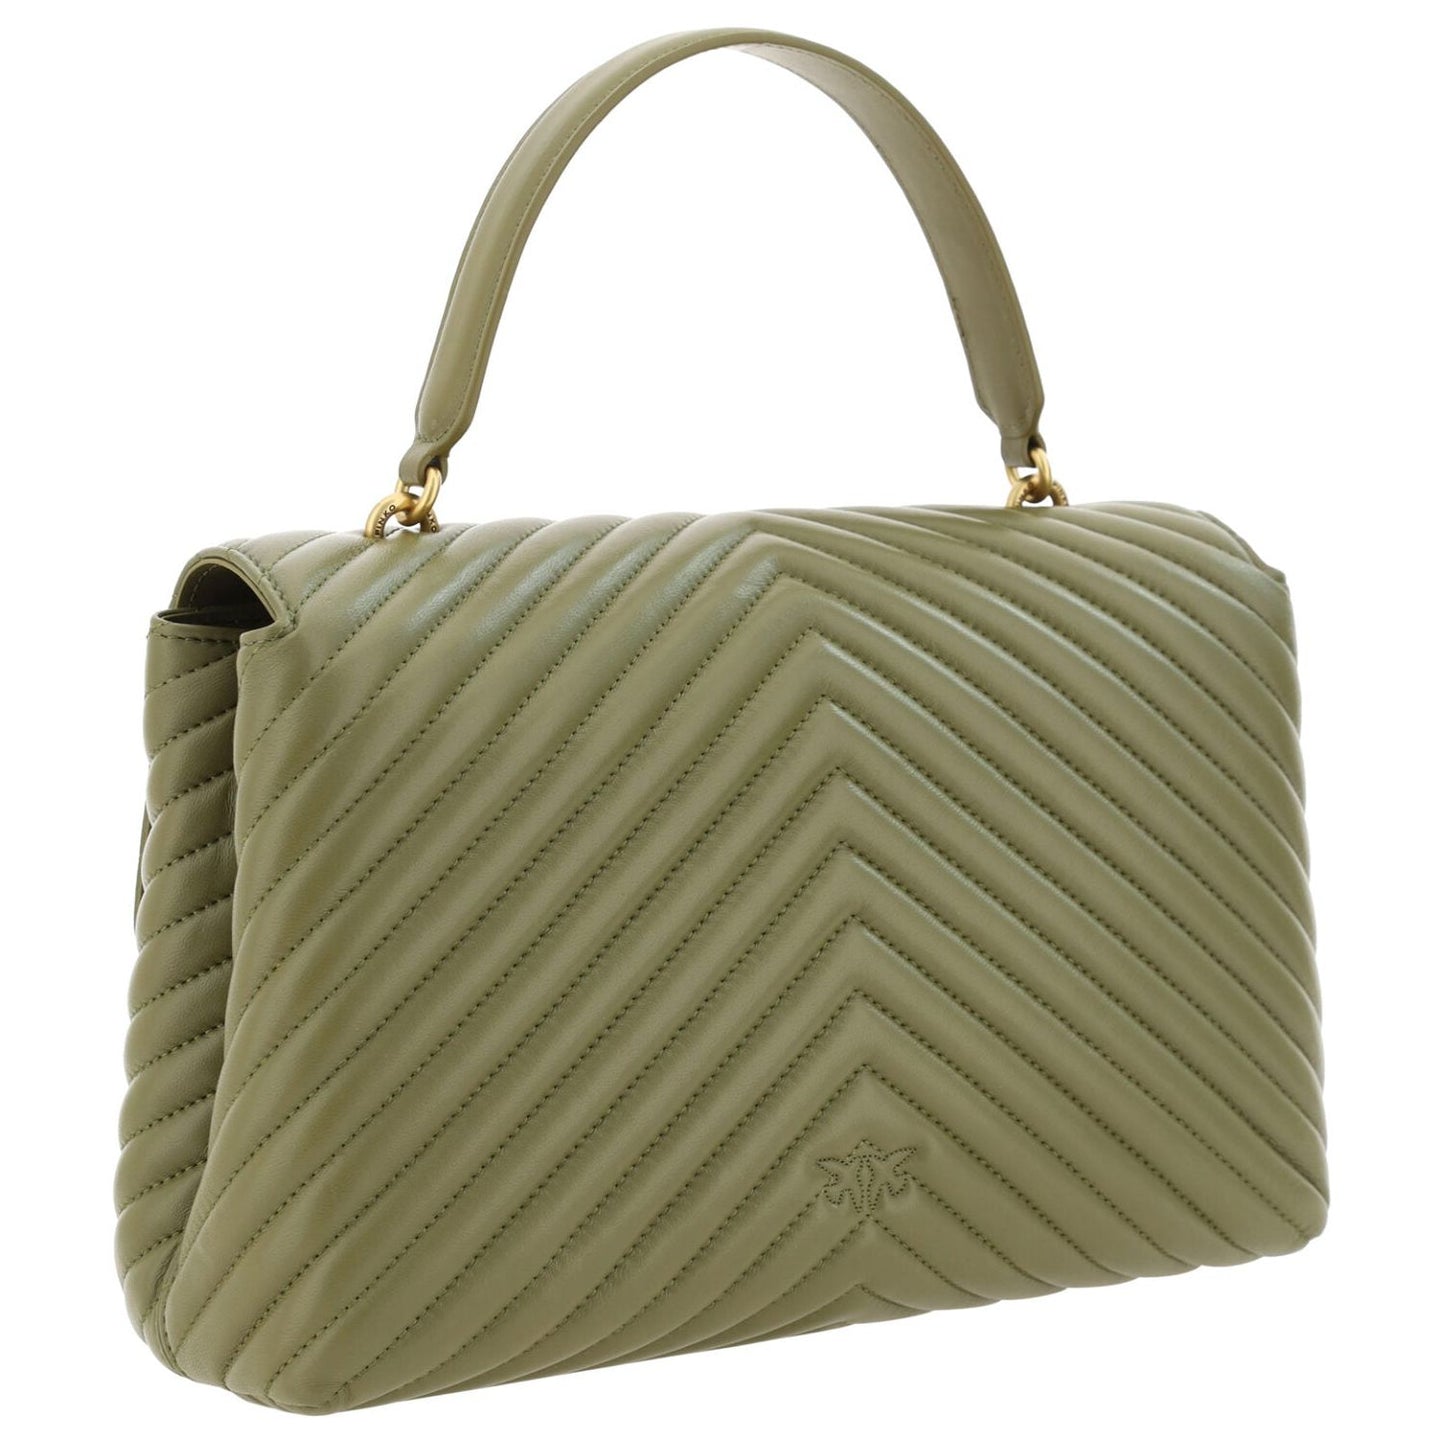 PINKO Emerald Elegance Calf Leather Handbag green-calf-leather-love-lady-handbag